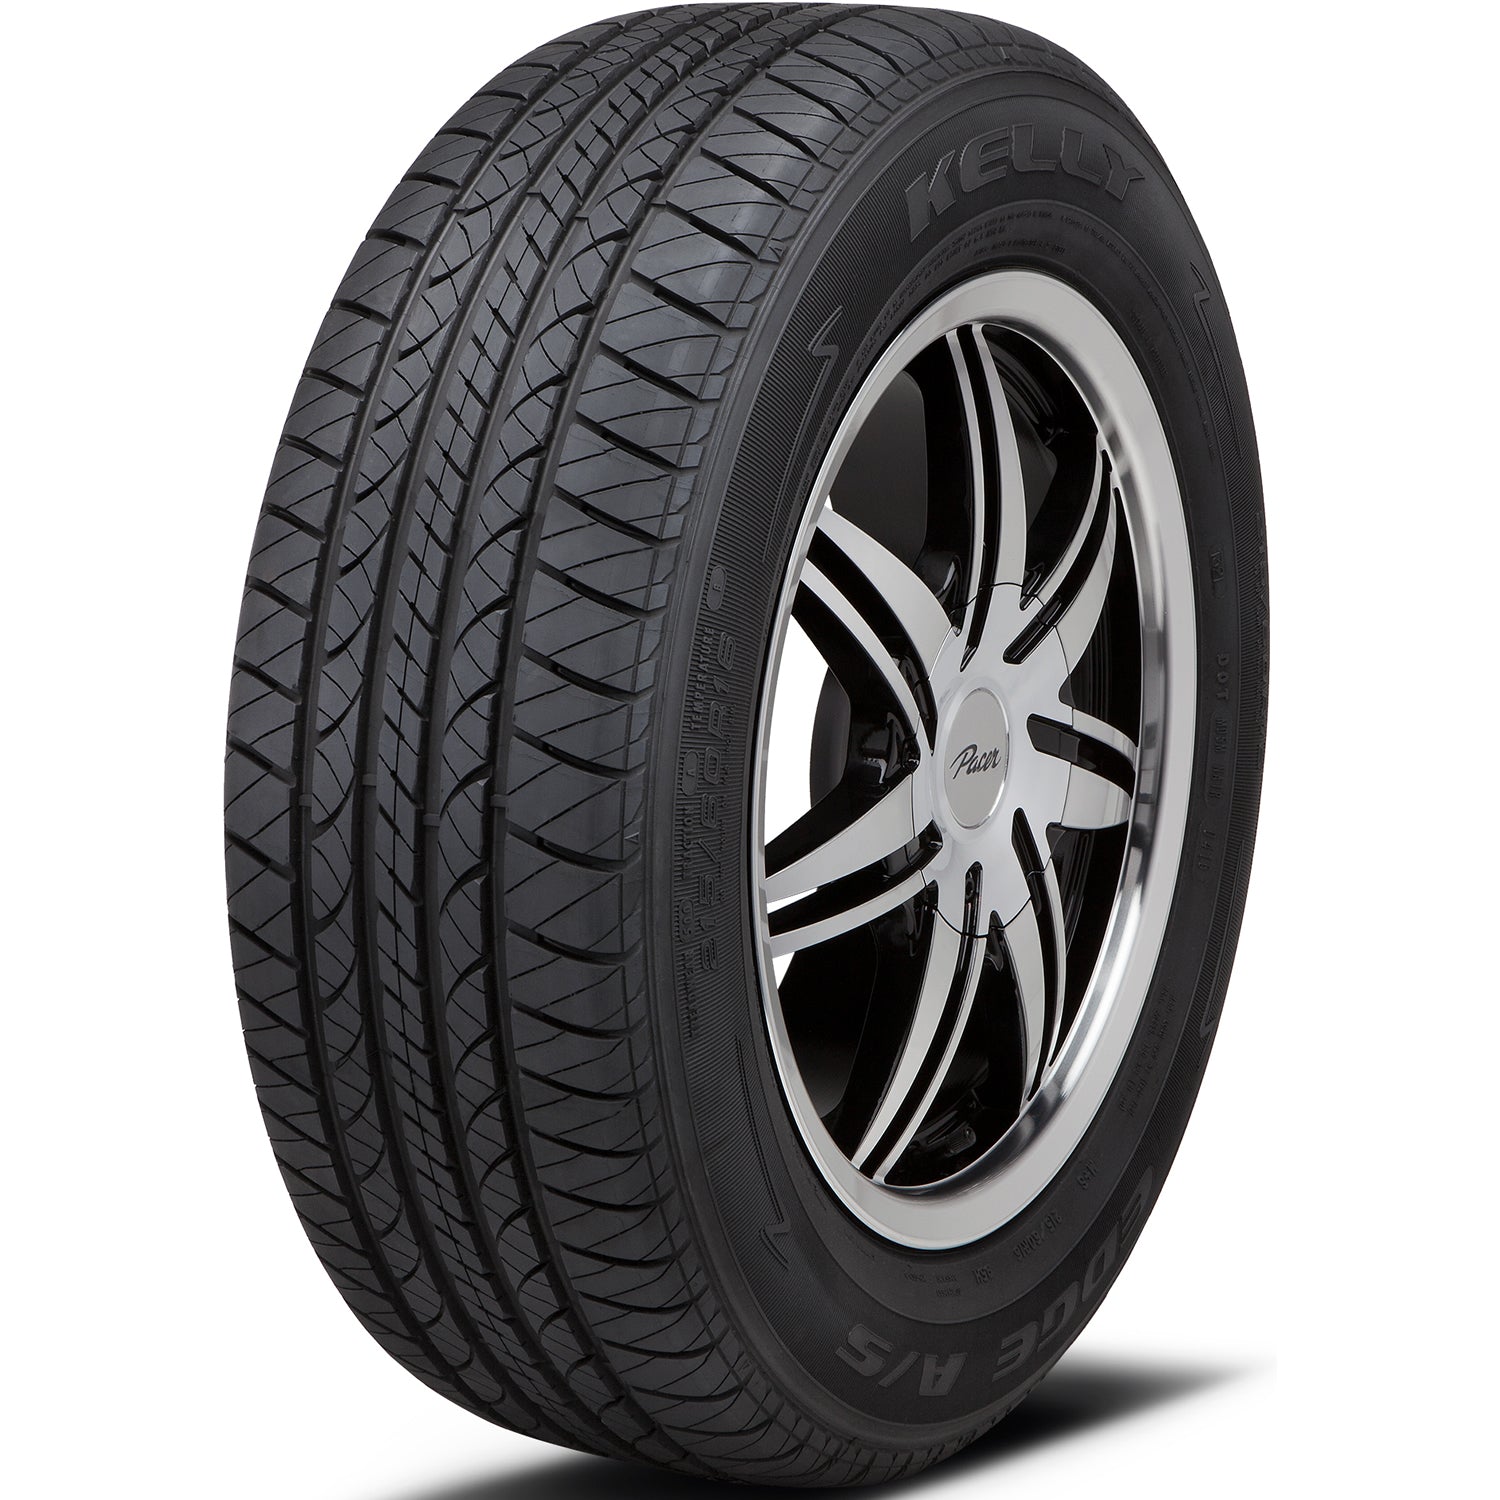 KELLY EDGE AS PERFORMANCE 235/55R18 (28.1X9.7R 18) Tires